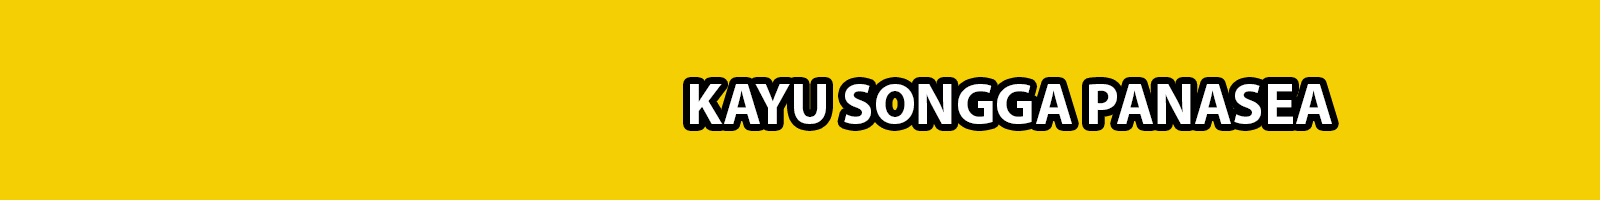 Kayu Songga : Obat Tifus, Malaria, Cacar Air, Darah Rendah/Tinggi, Asam Urat, Malaria, Diabetes dll.